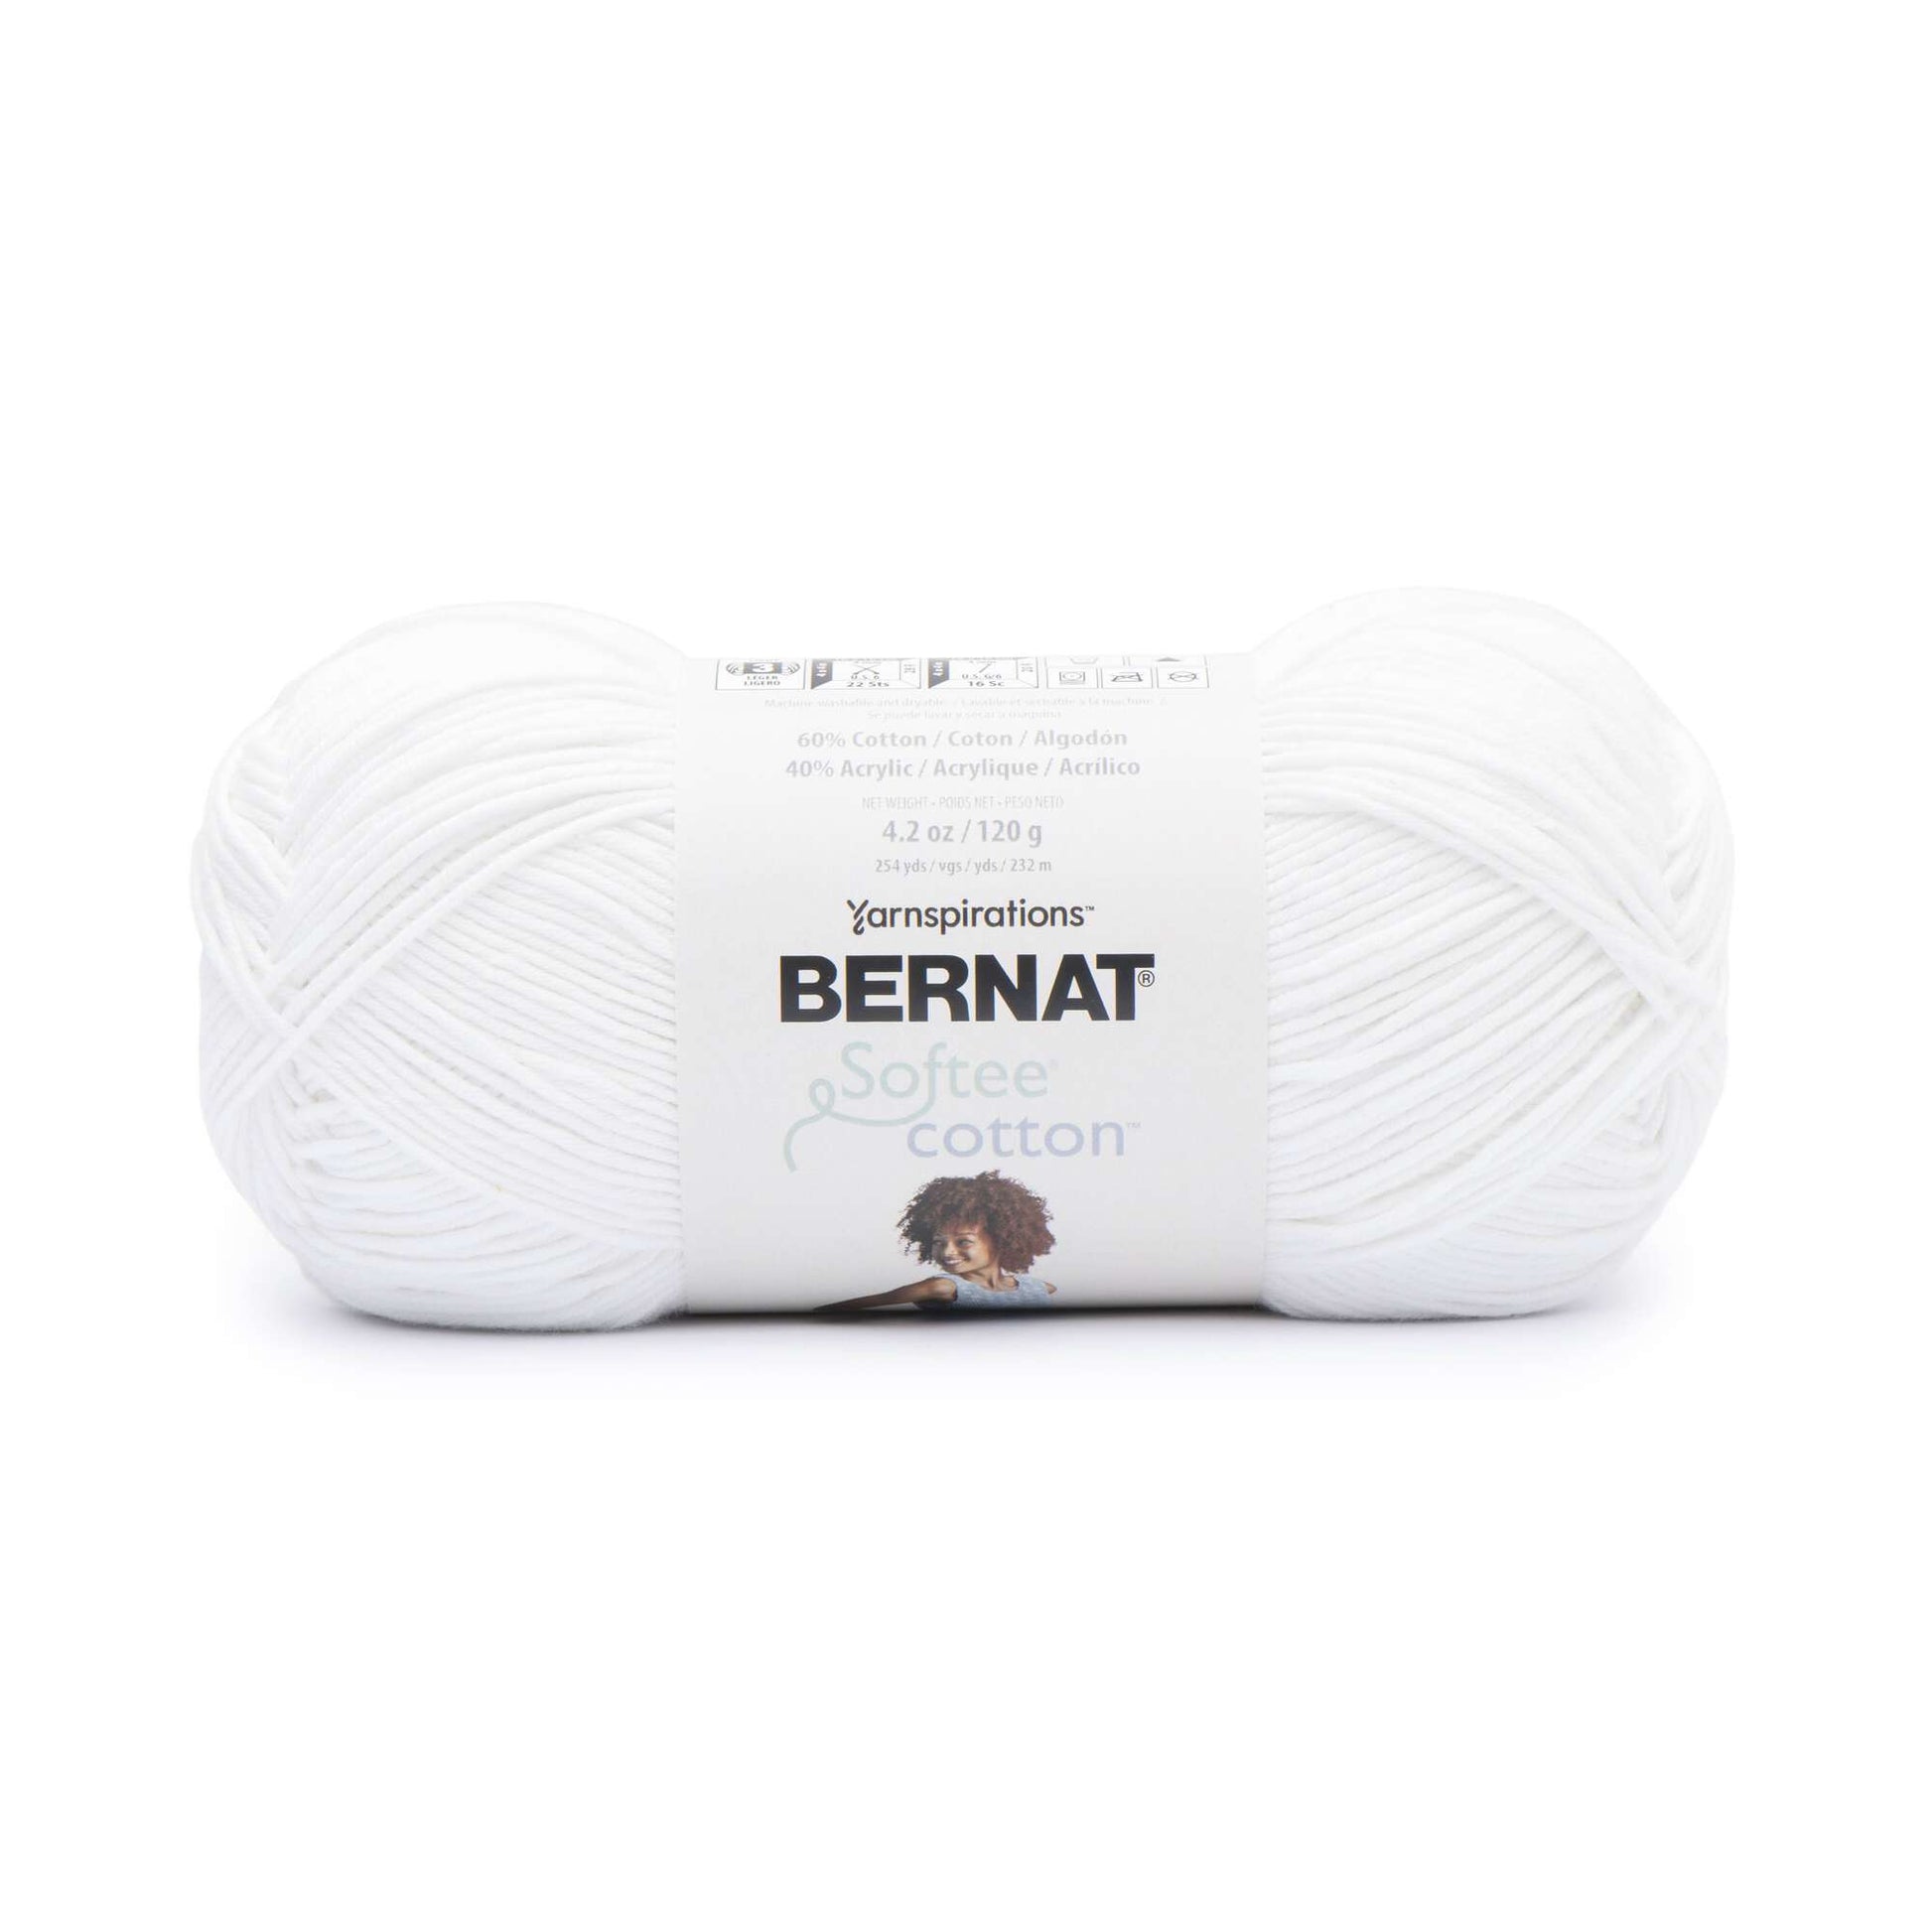 Bernat Softee Cotton #3 Light Cotton Blend Yarn, Golden Haze 4.2oz/120g, 254 Yards (3 Pack), Size: Three-Pack